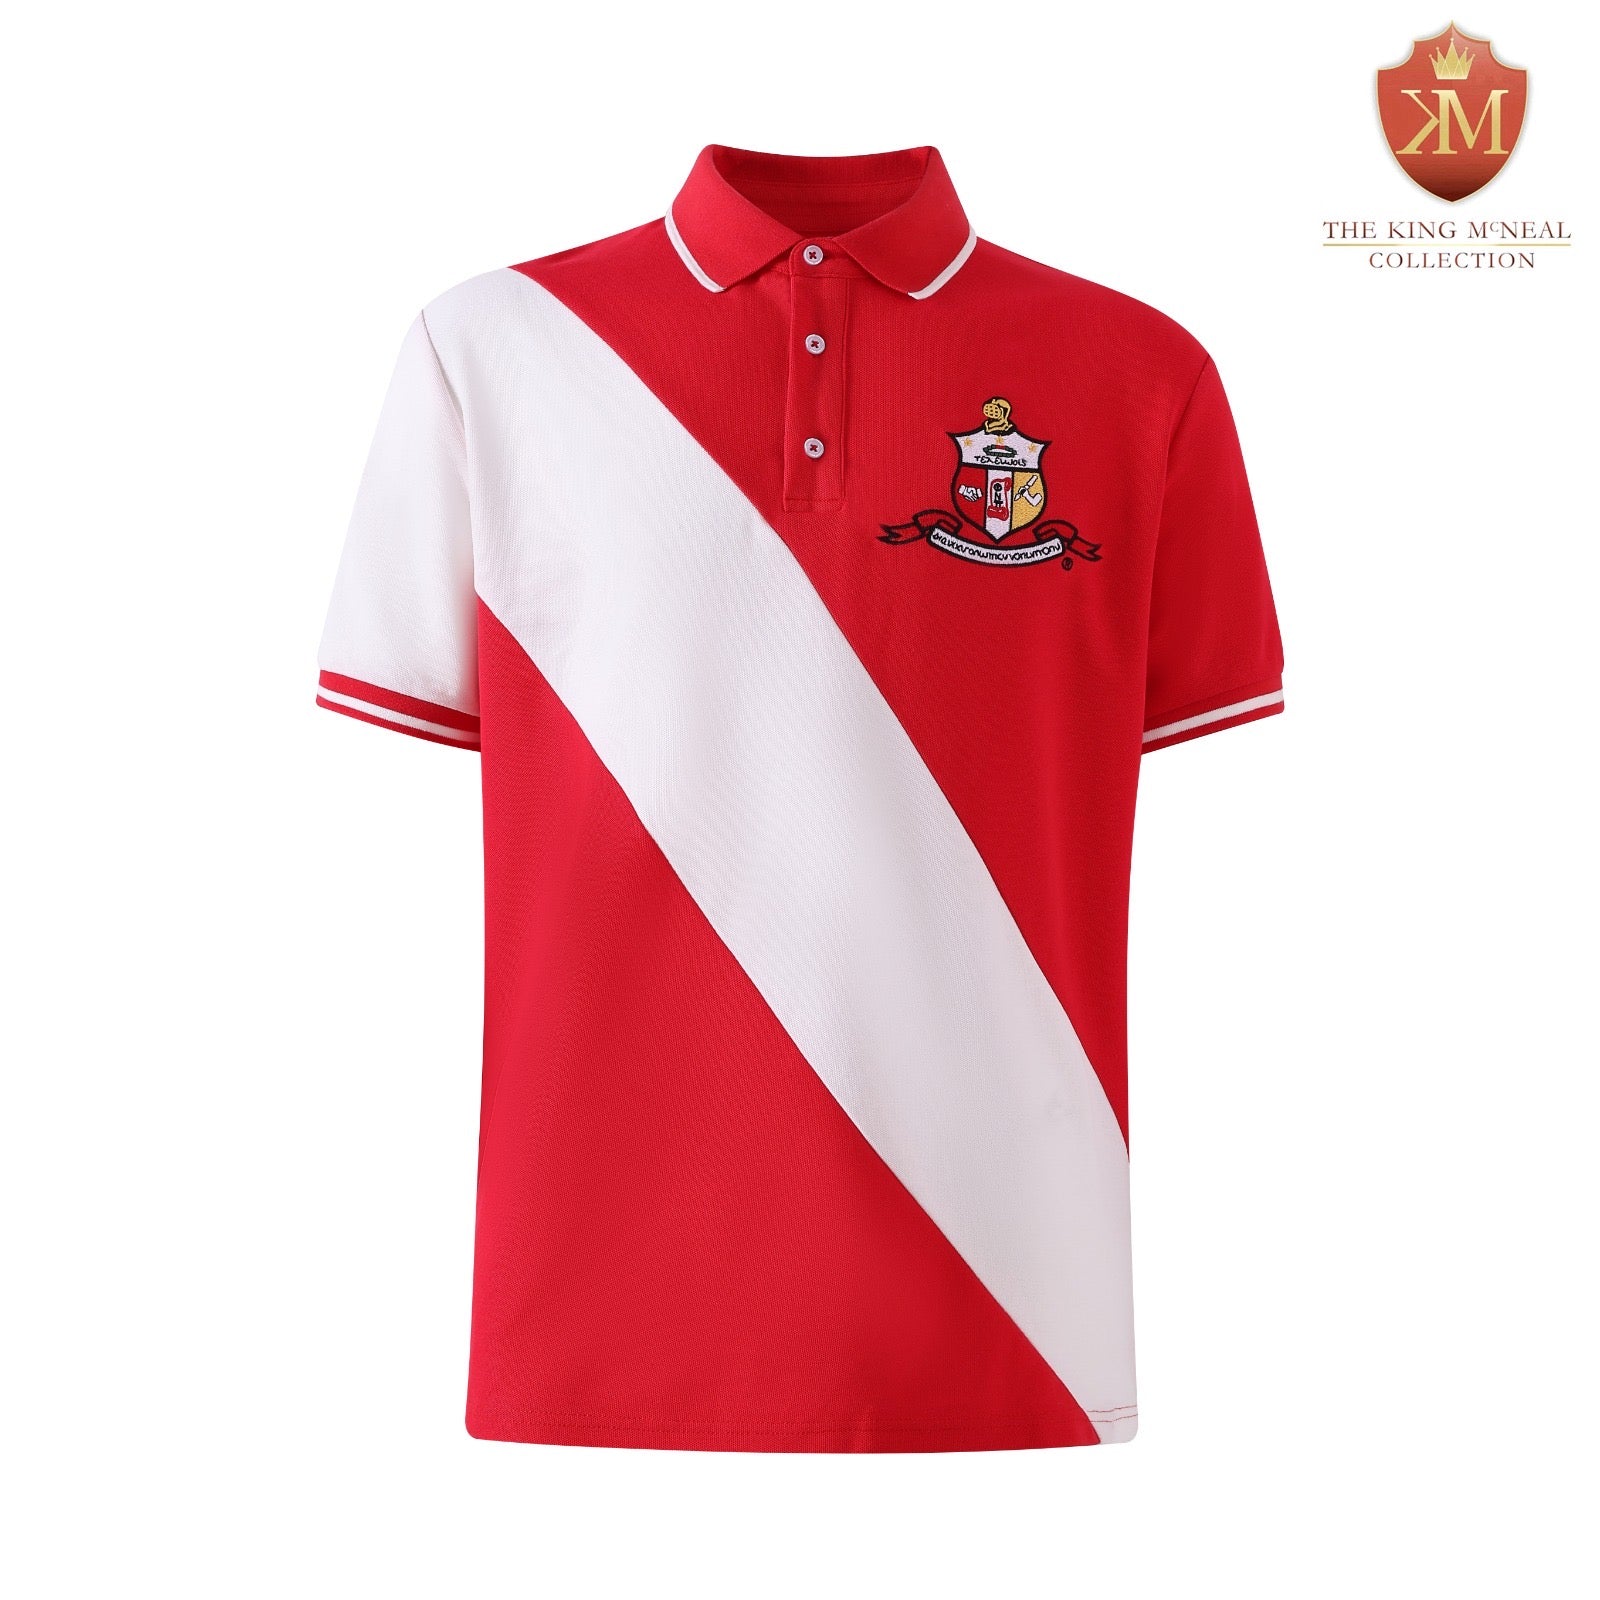 Kappa 11 Premium Red Polo Shirt